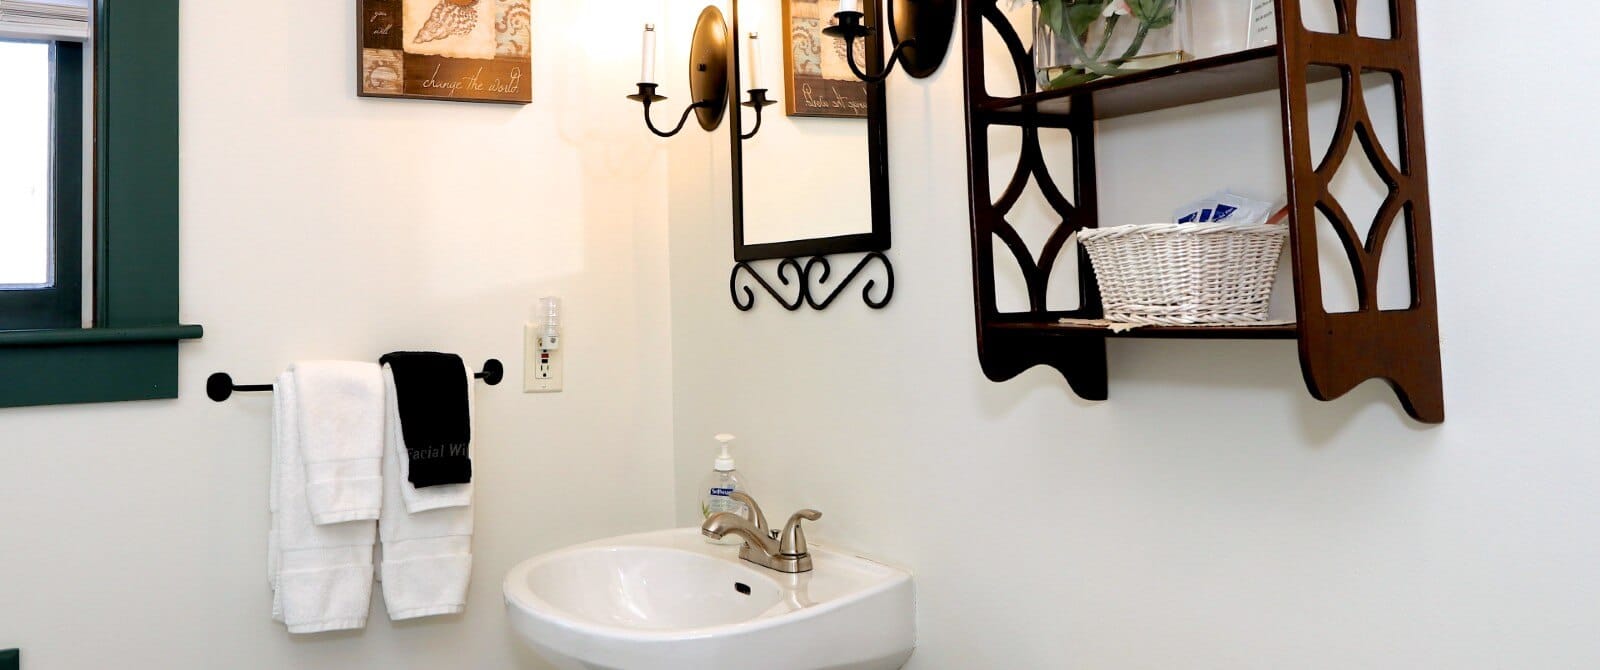 White bathroom with pedestal sink, black framed mirror, hanging towels and wood shelf